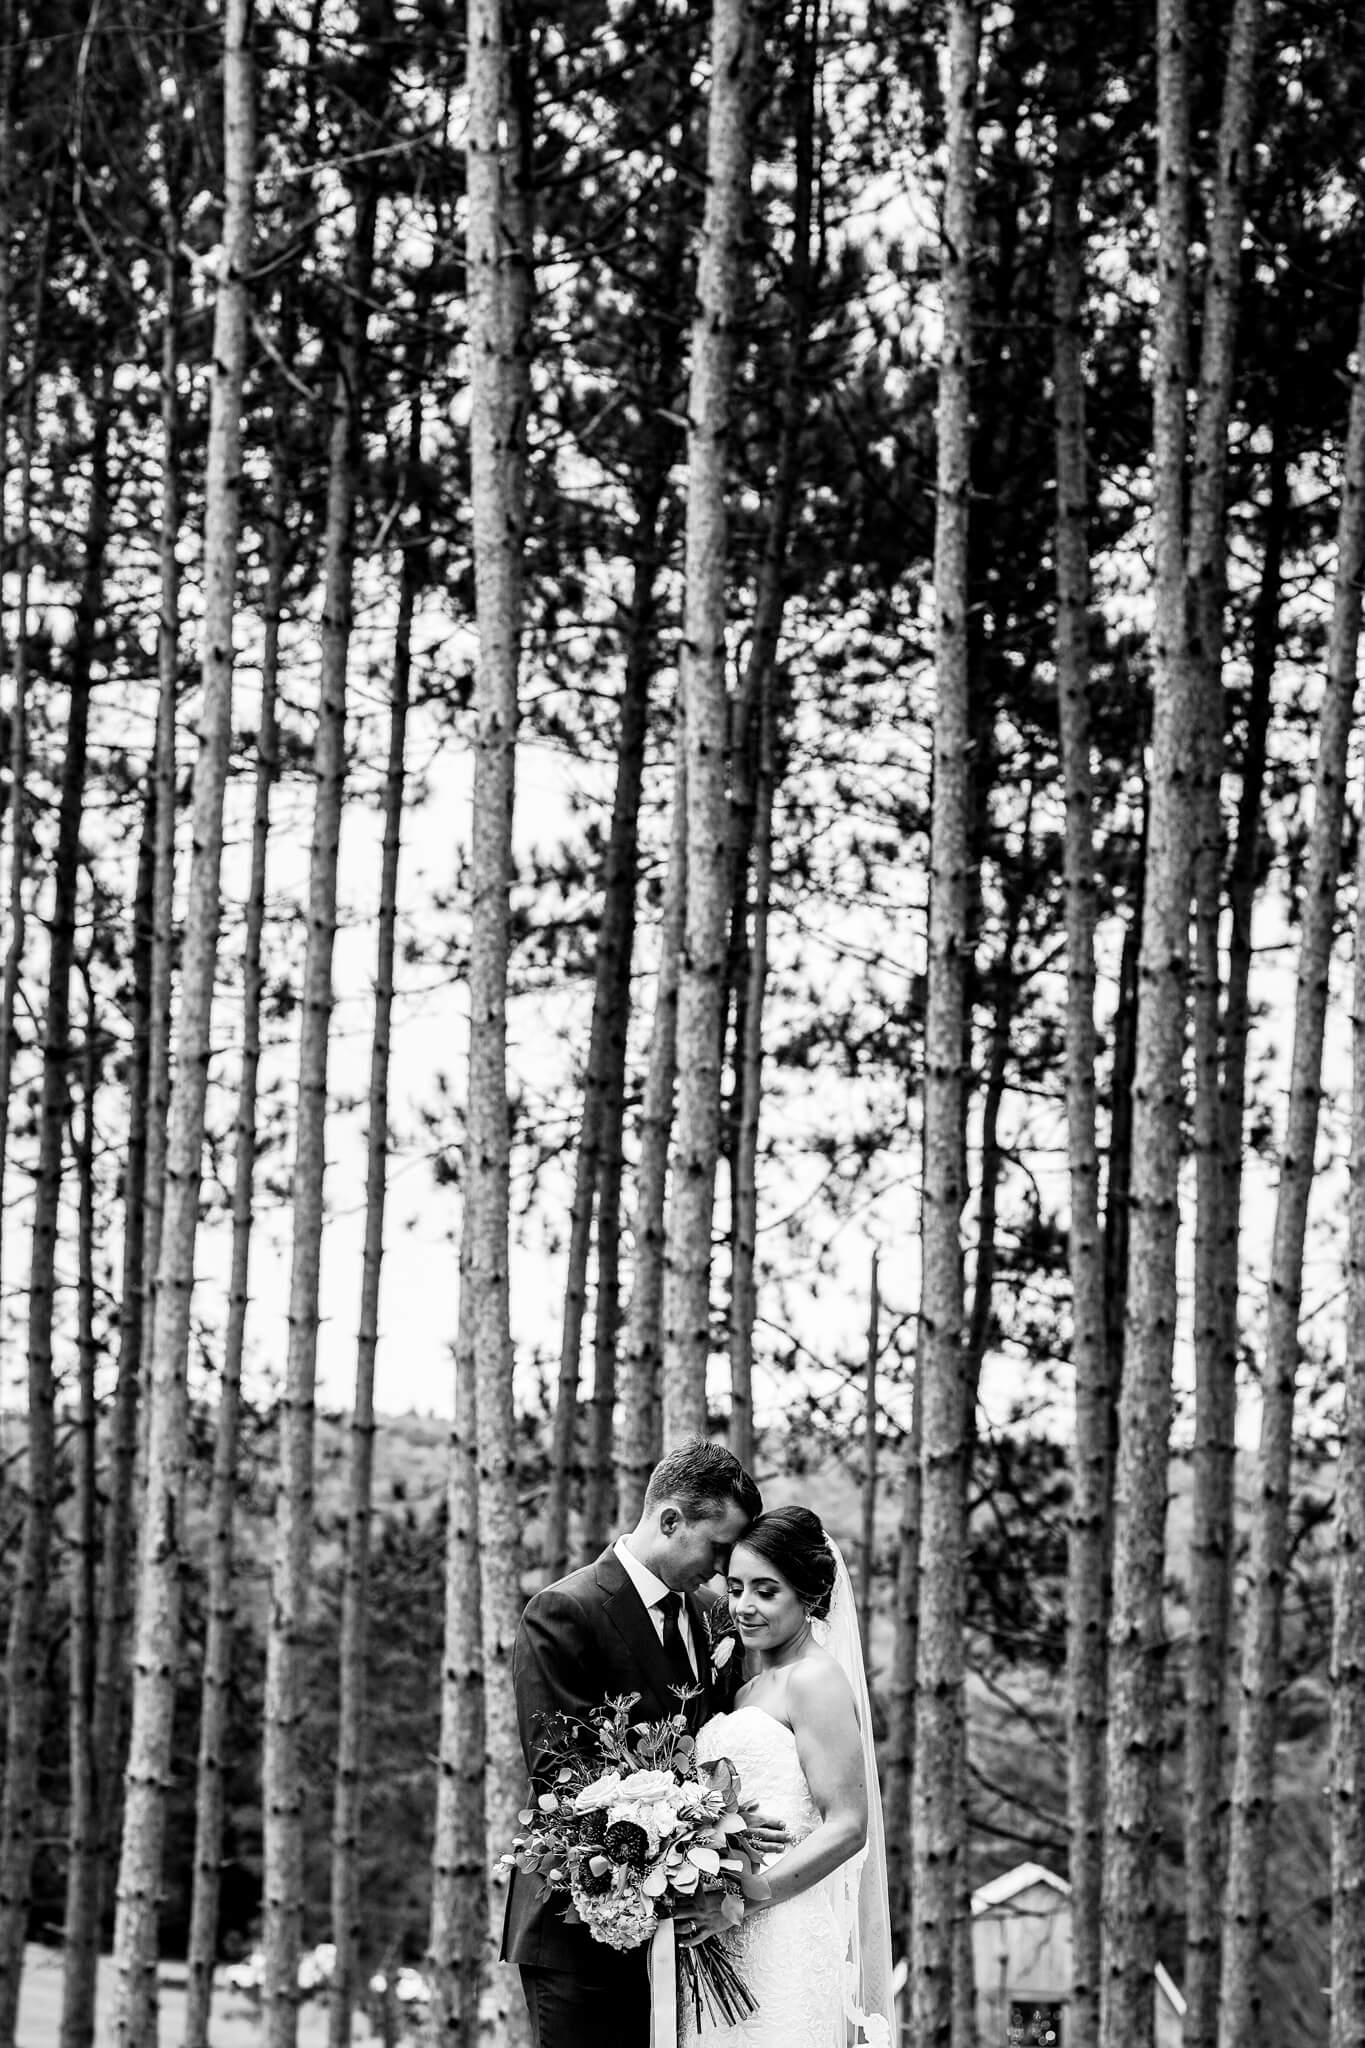 Lisa Jonathan Homestead Blessings Farm Corning NY Wedding Barn Trees Nature-33.jpg